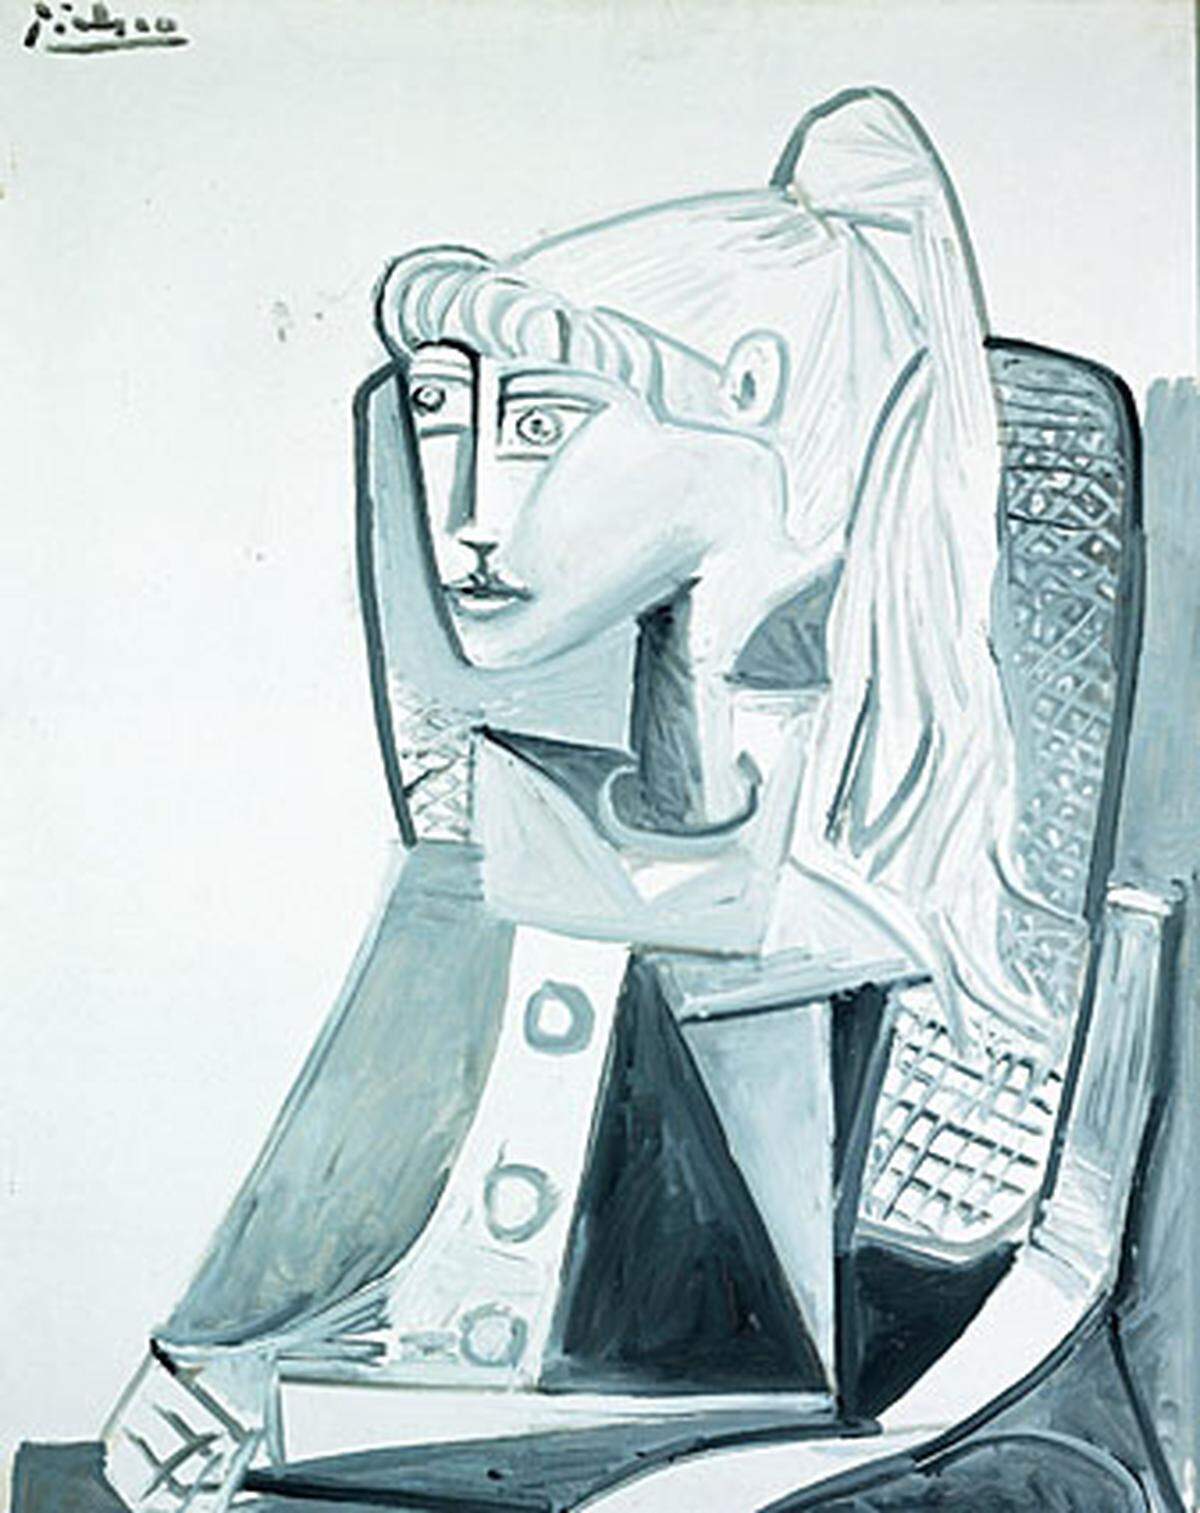 Pablo Picasso, Sylvette, 1954, Albertina, Wien – Sammlung Batliner (c) Succession Picasso, VBK, Wien 2009